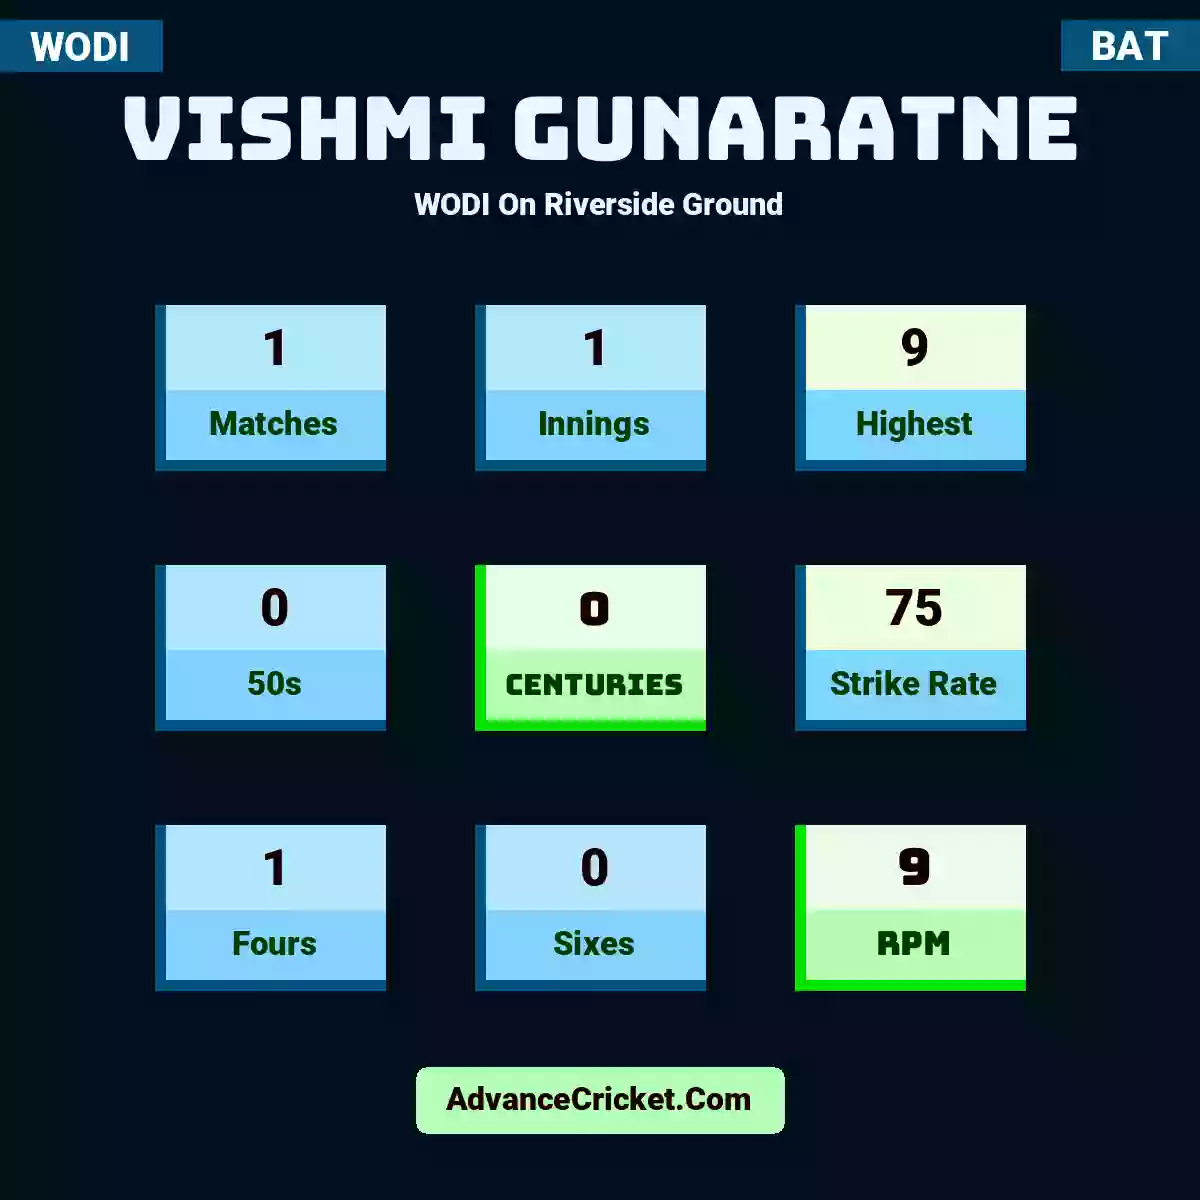 Vishmi Gunaratne WODI  On Riverside Ground, Vishmi Gunaratne played 1 matches, scored 9 runs as highest, 0 half-centuries, and 0 centuries, with a strike rate of 75. V.Gunaratne hit 1 fours and 0 sixes, with an RPM of 9.